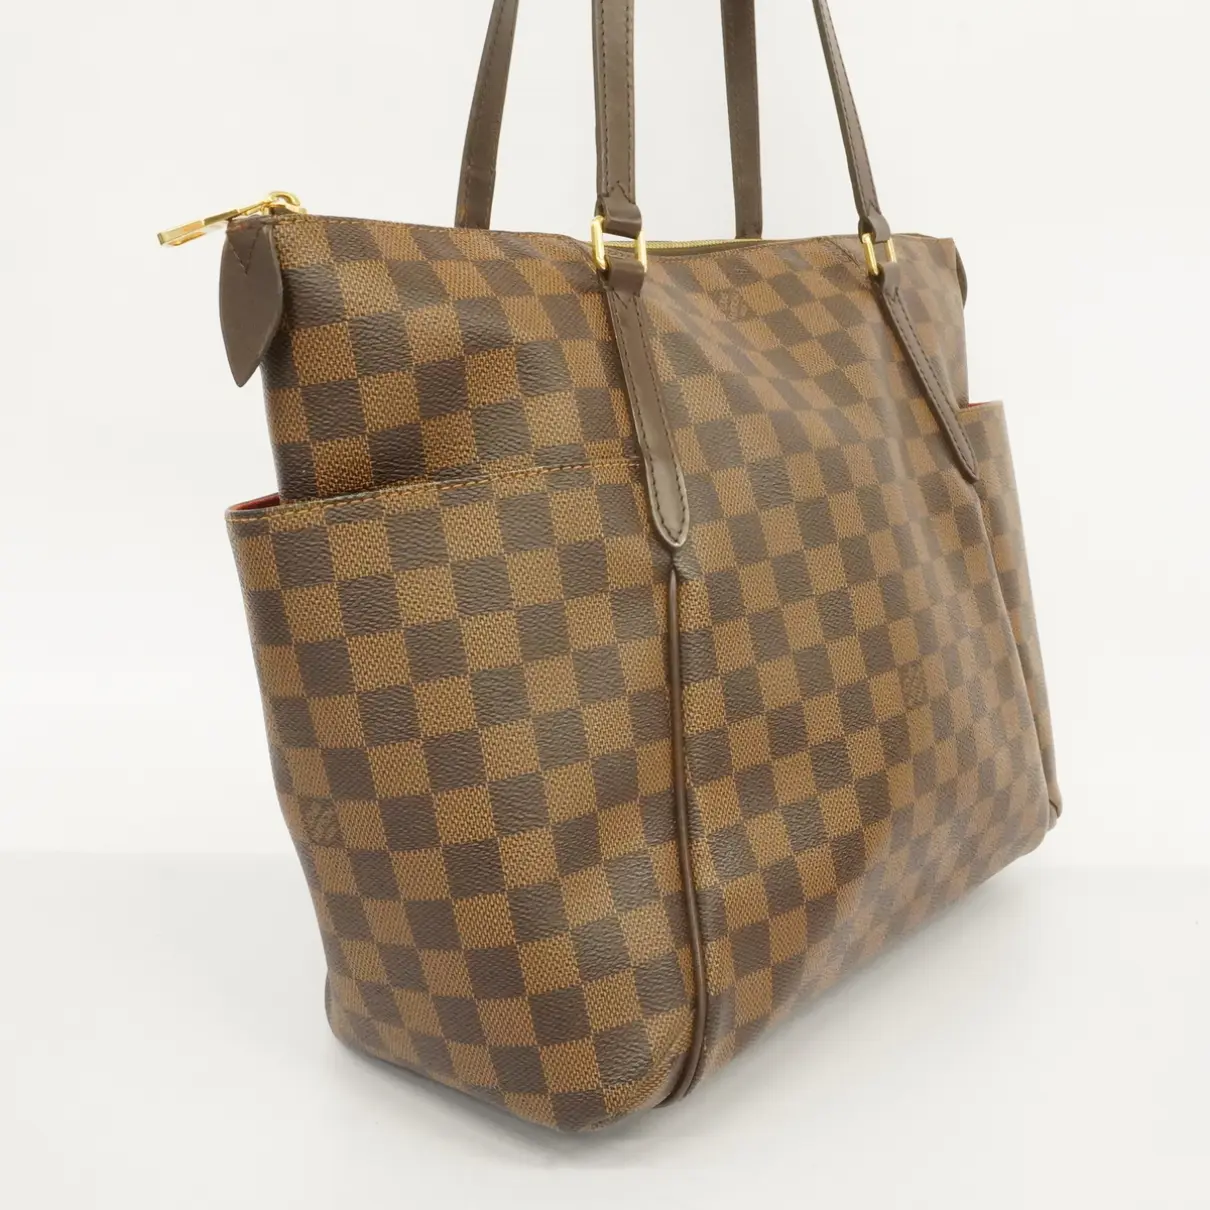 Buy Louis Vuitton Totally leather handbag online